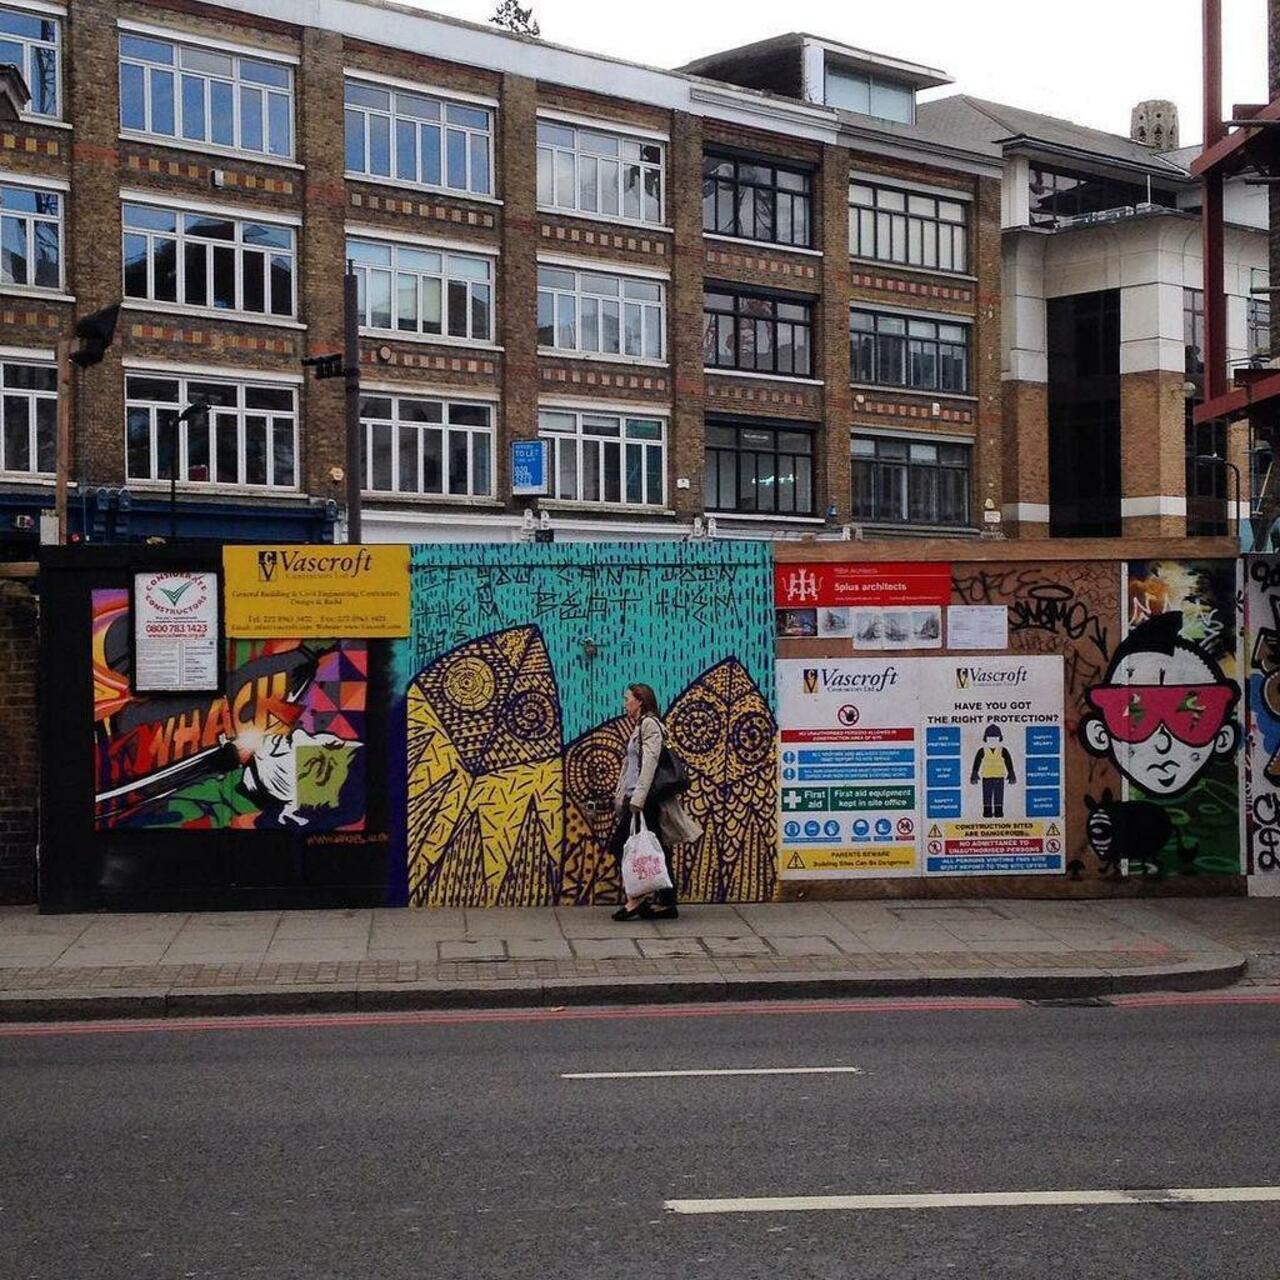 Streets & #streetart #streetartlondon #graffiti #london #thisislondon by isadarko http://t.co/ORZ85NJQ77